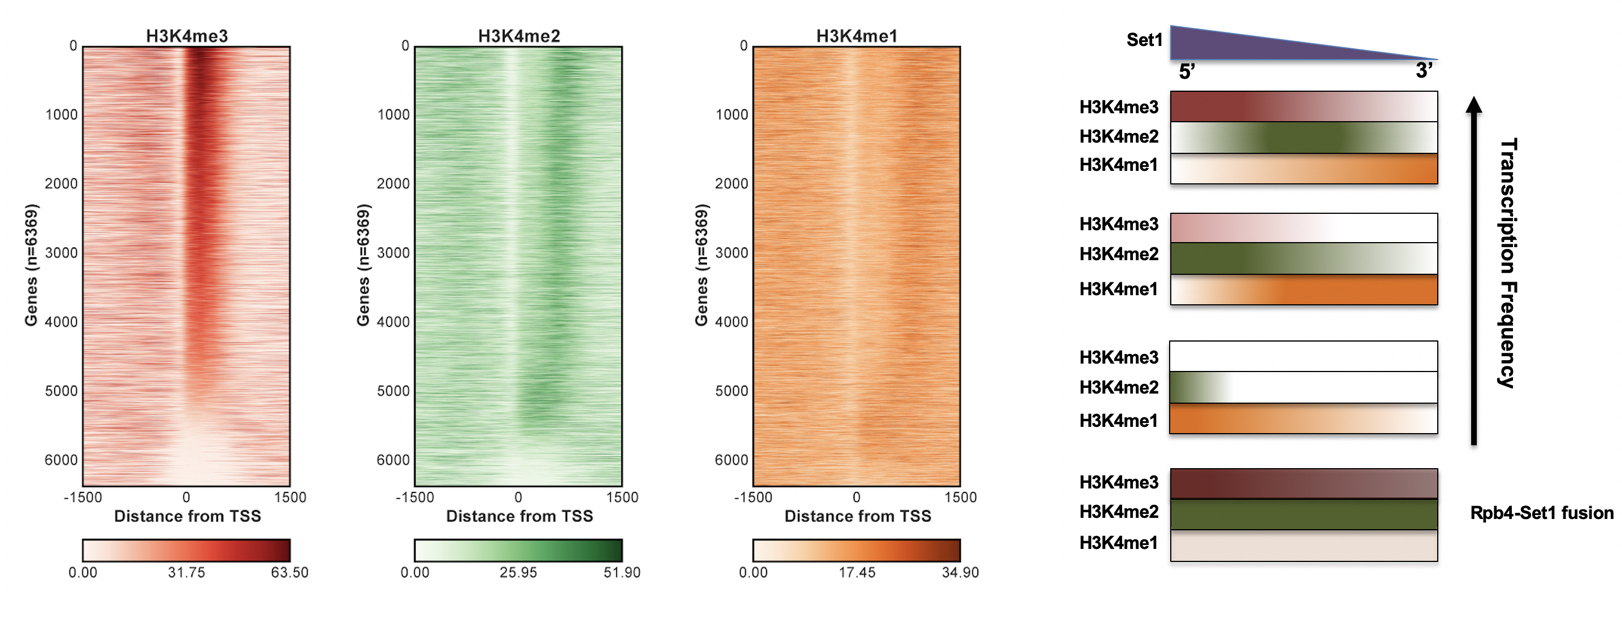 The Histone H3K4 Methylation Gradient